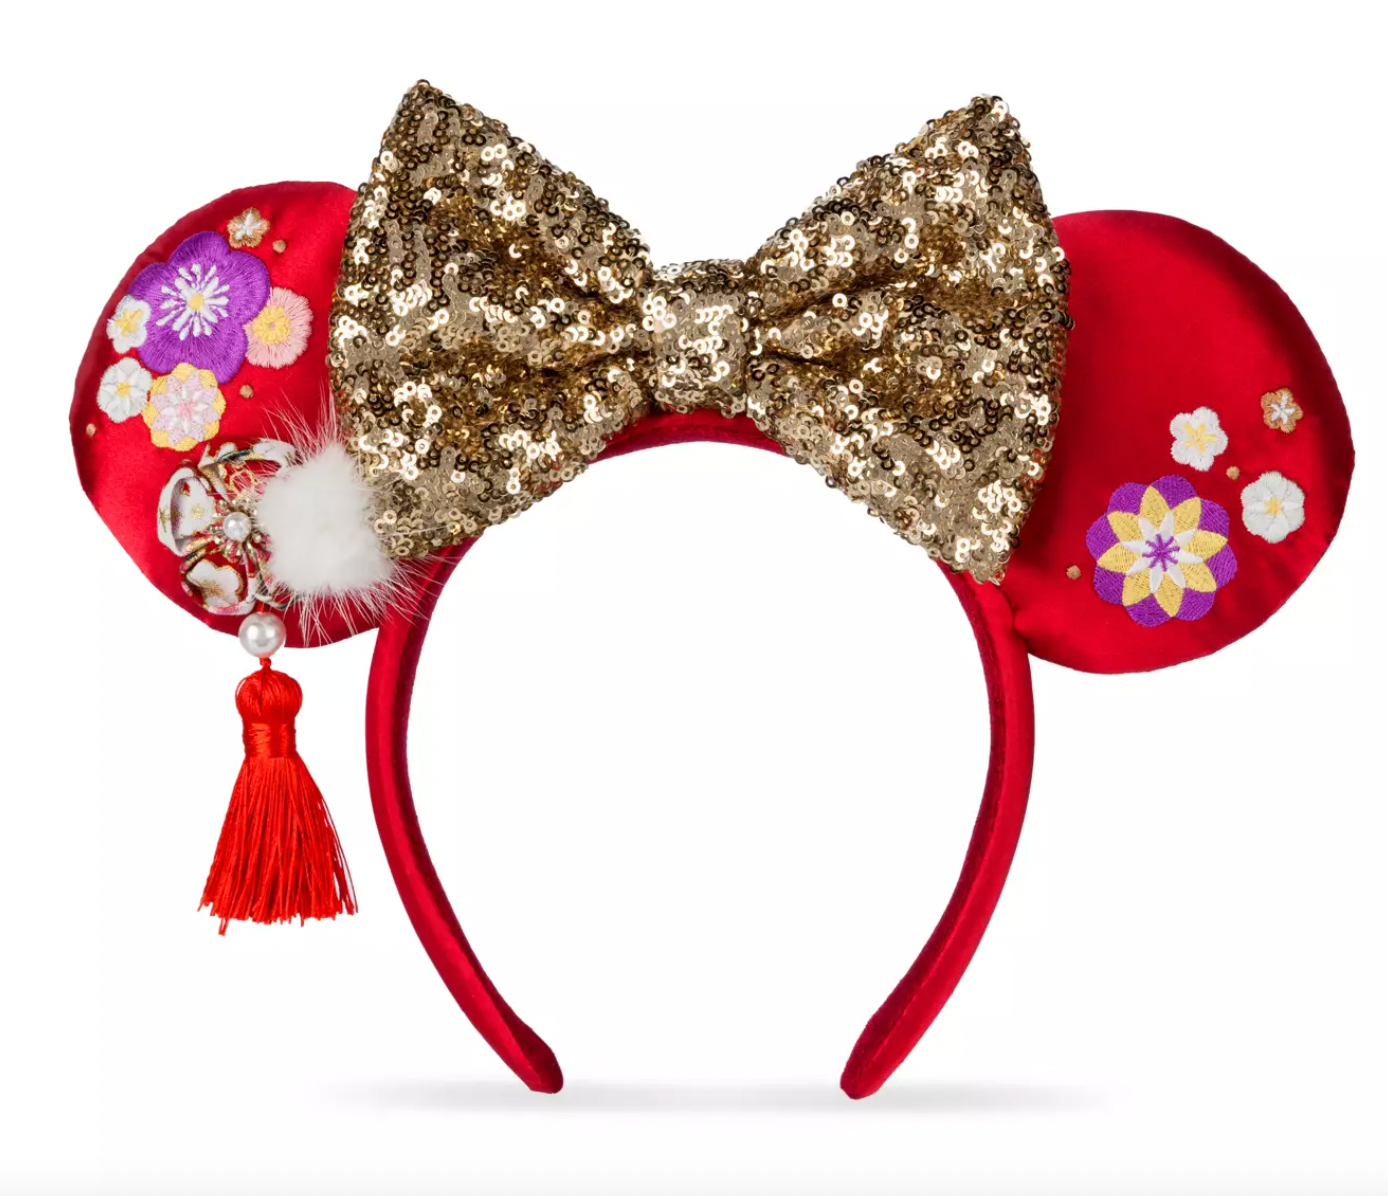 Minnie Mouse Ear Headband for Adults